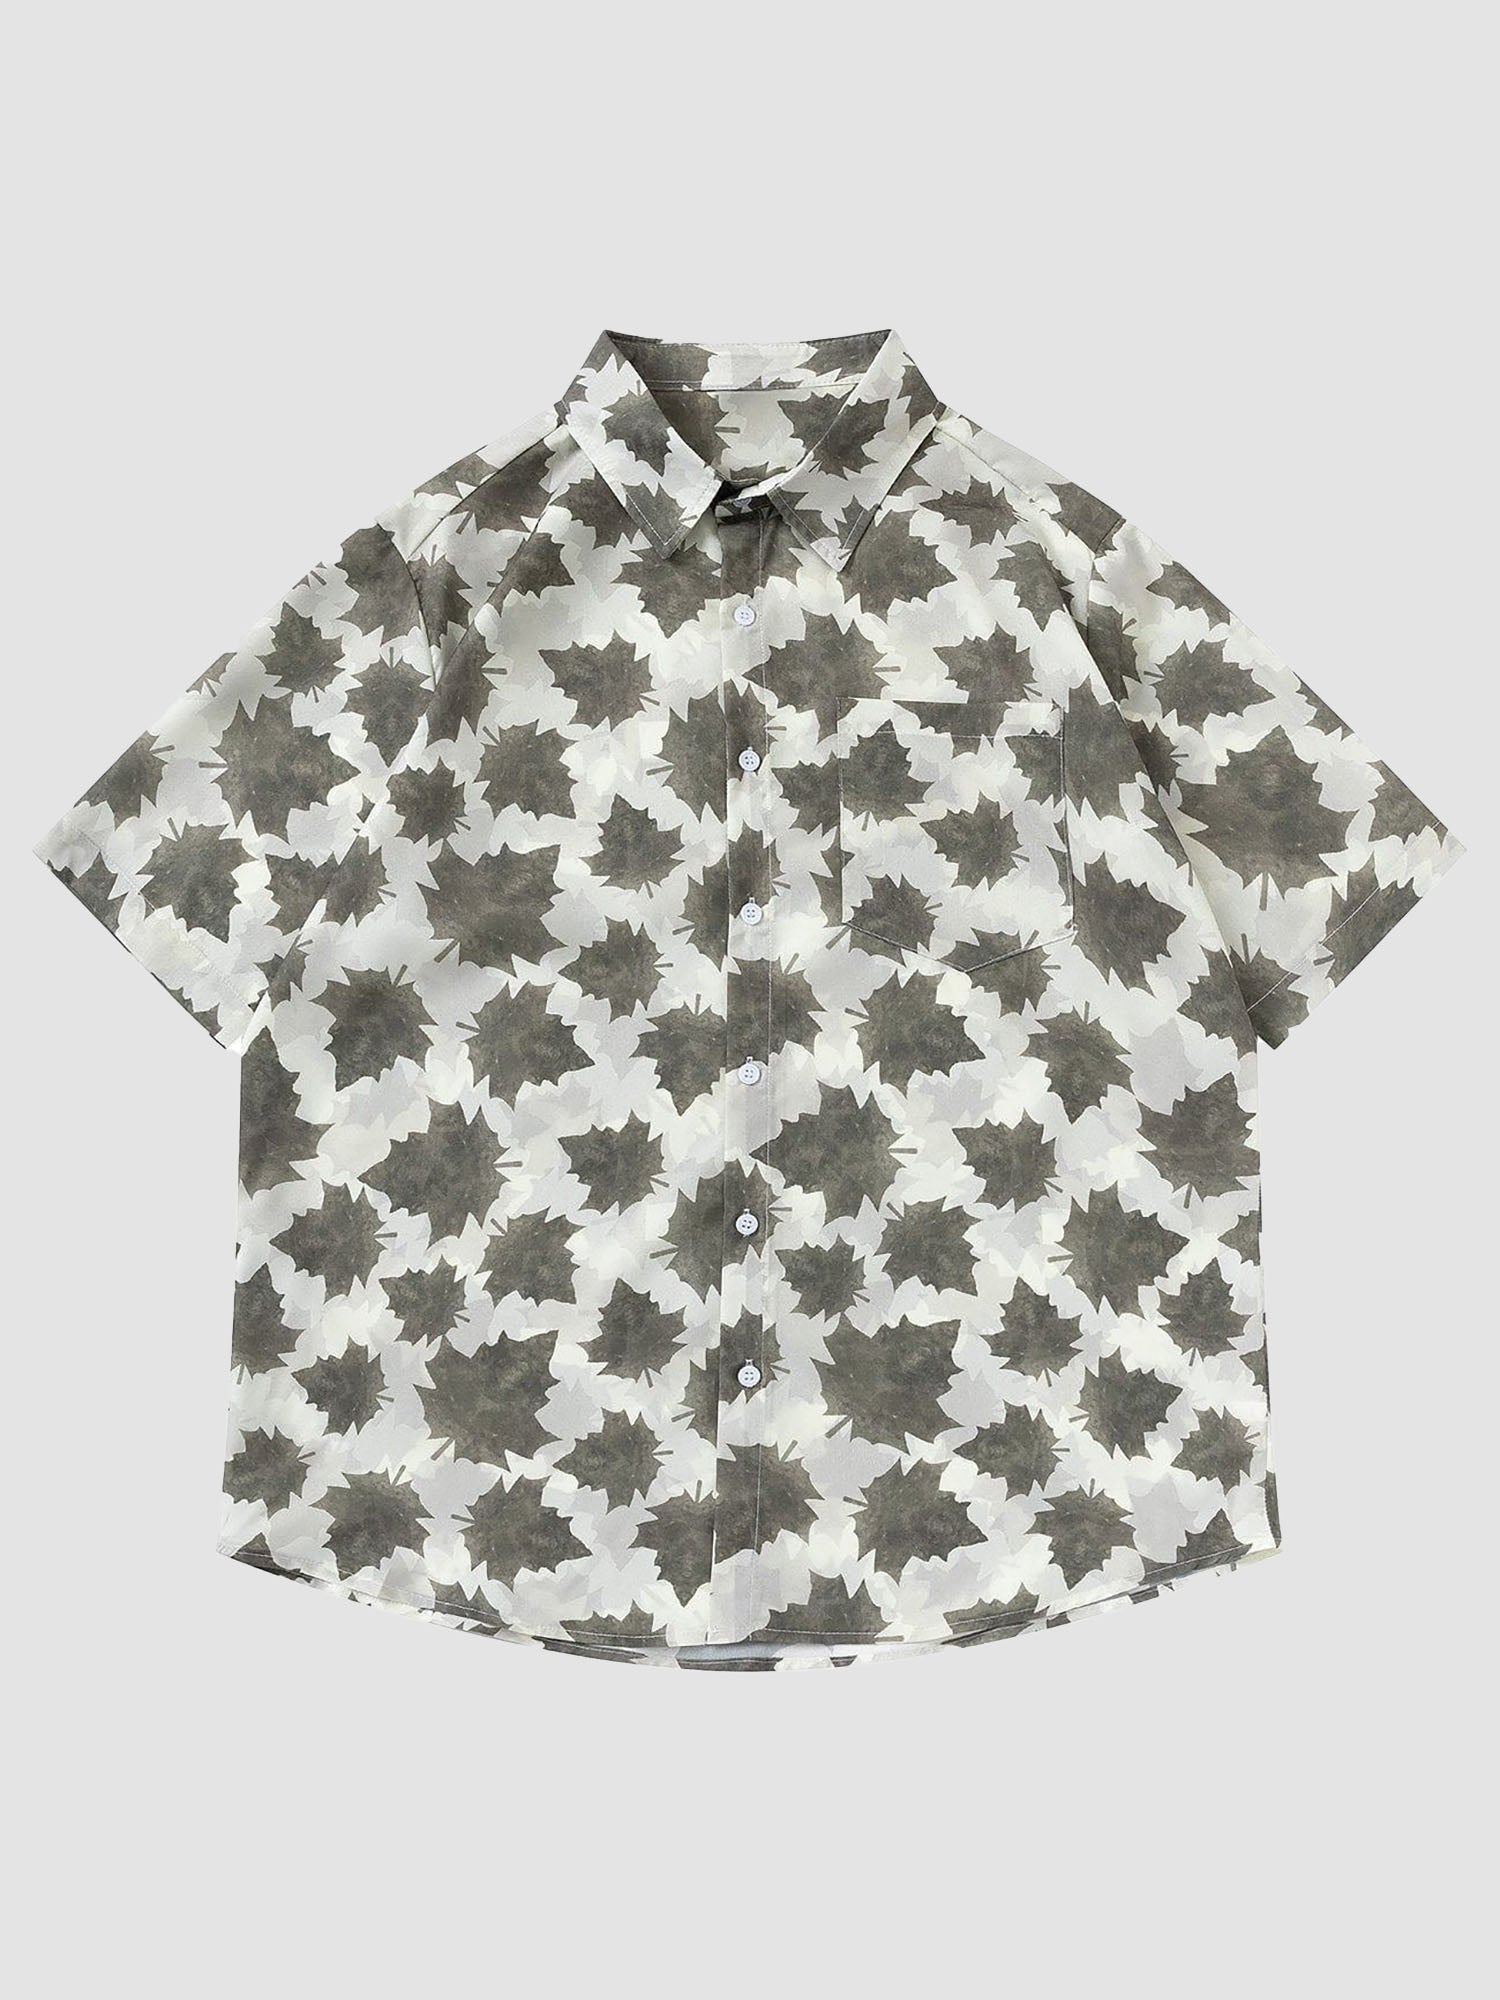 JUSTNOTAG Full Maple Leaf Print Short Sleeve Shirts